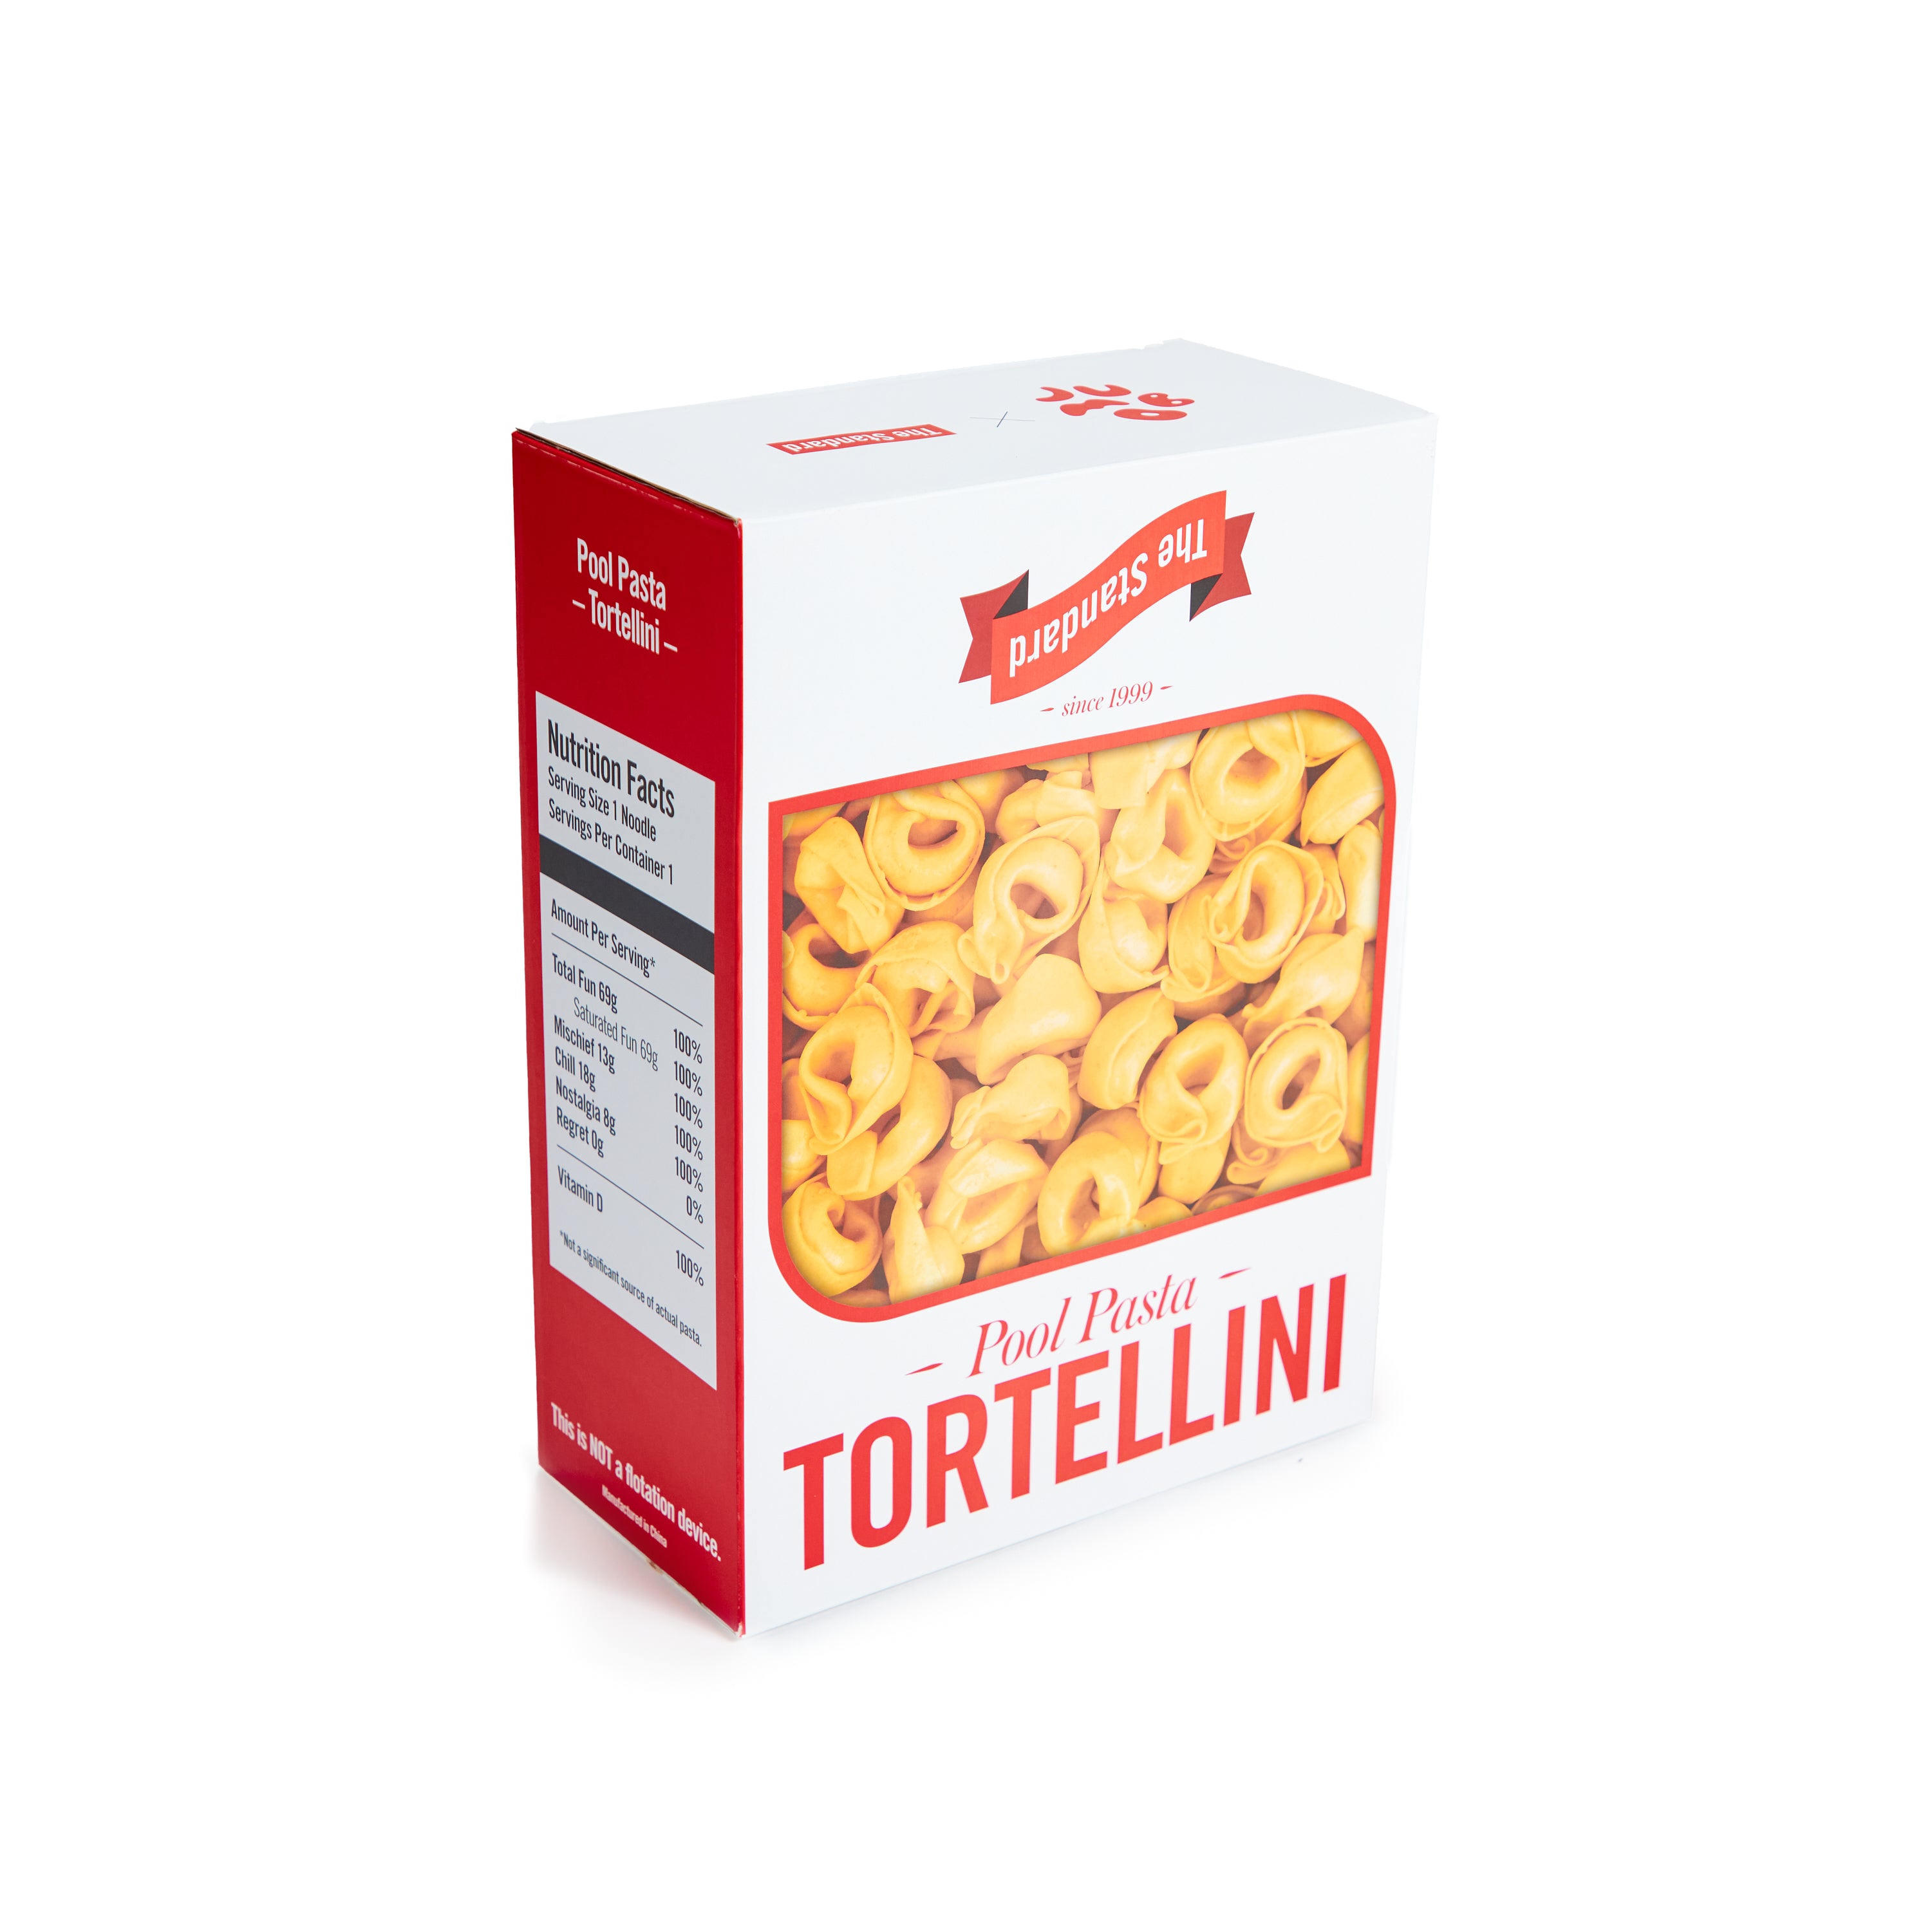 Tortellini - Shop The Standard